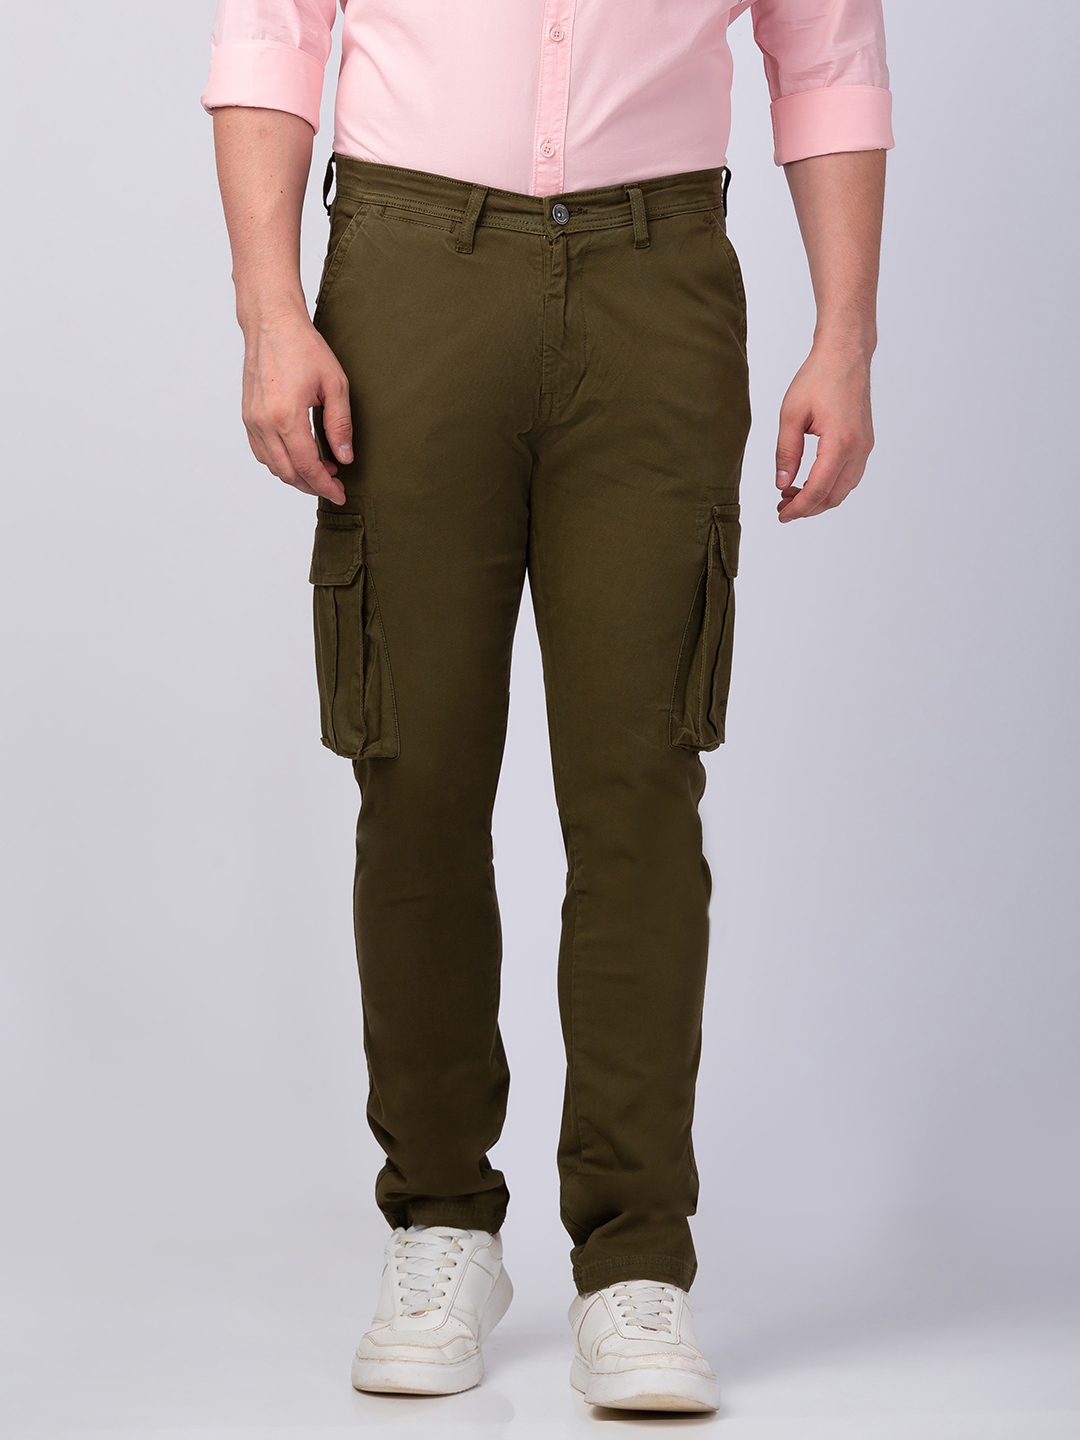 spykar | Men's Green Cotton Solid Trousers